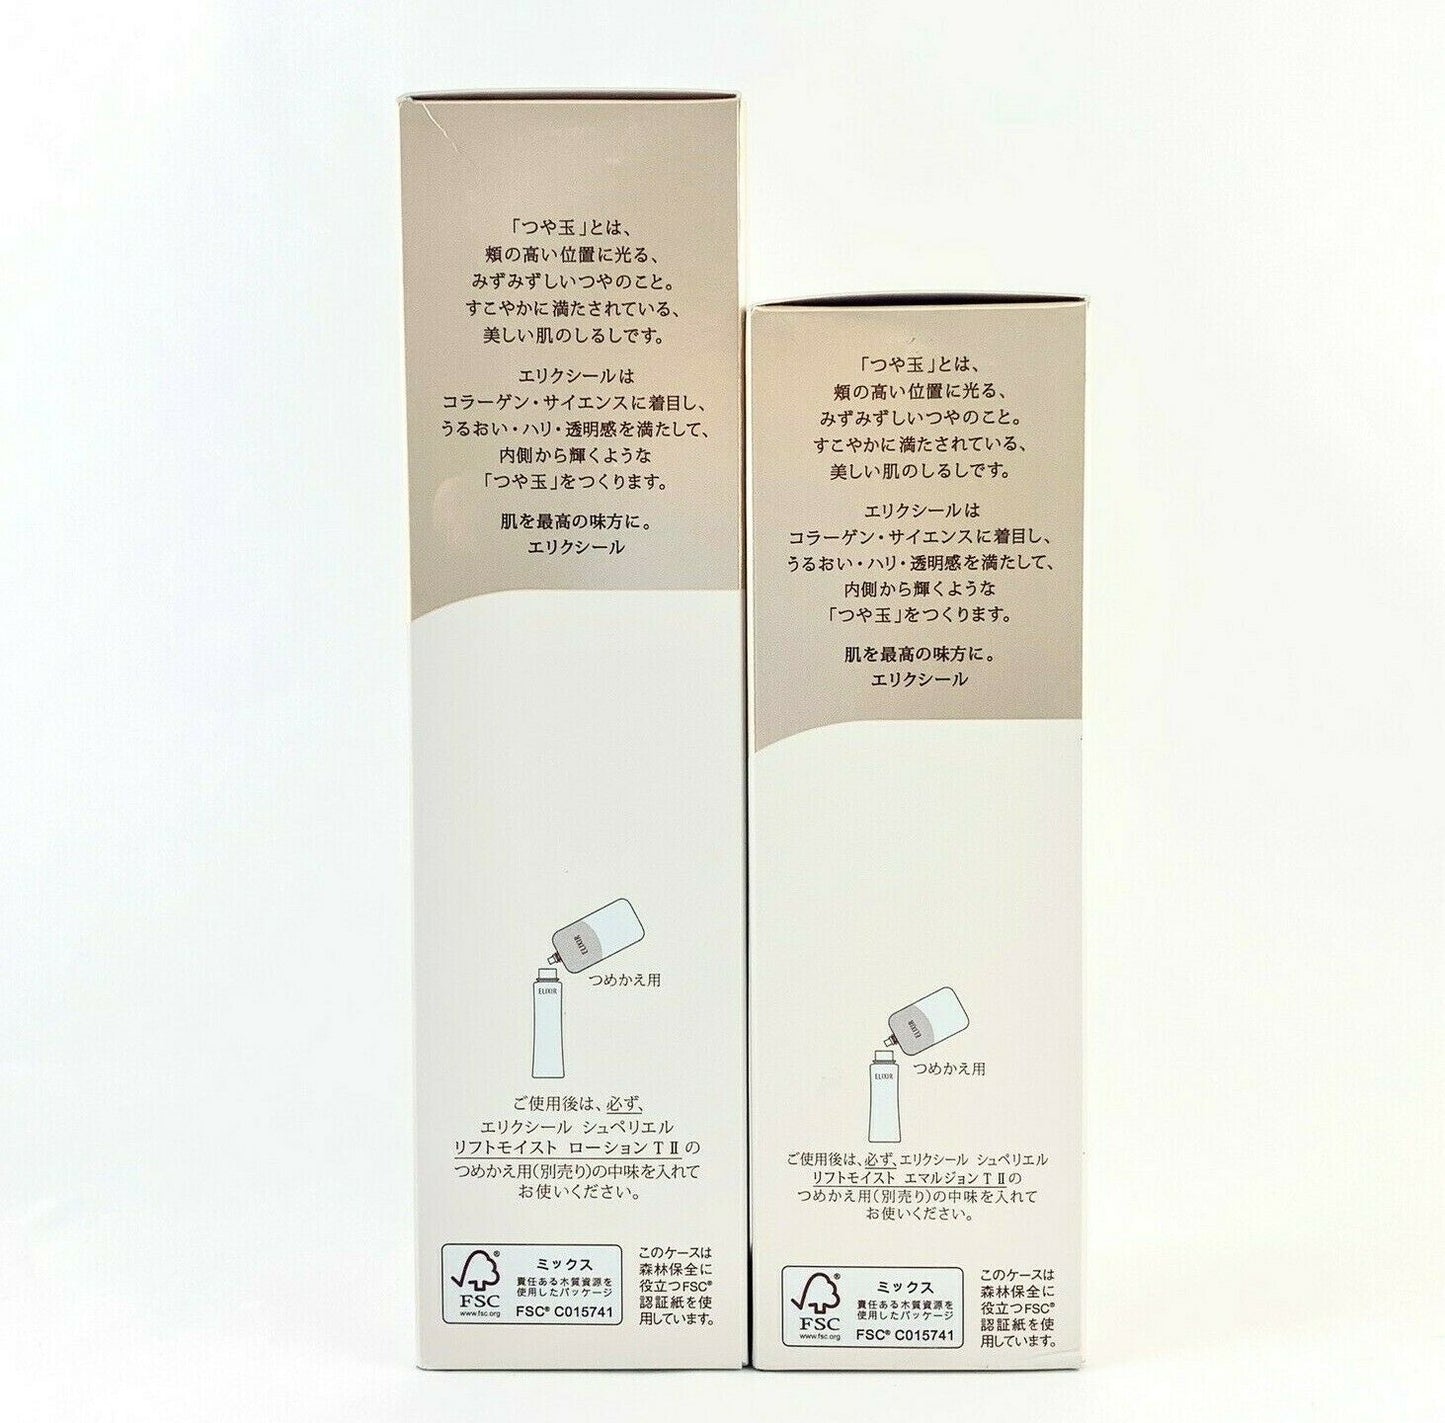 Shiseido Elixir Skin Care By Age Lifting Moisture Lotion II & Emulsion II.